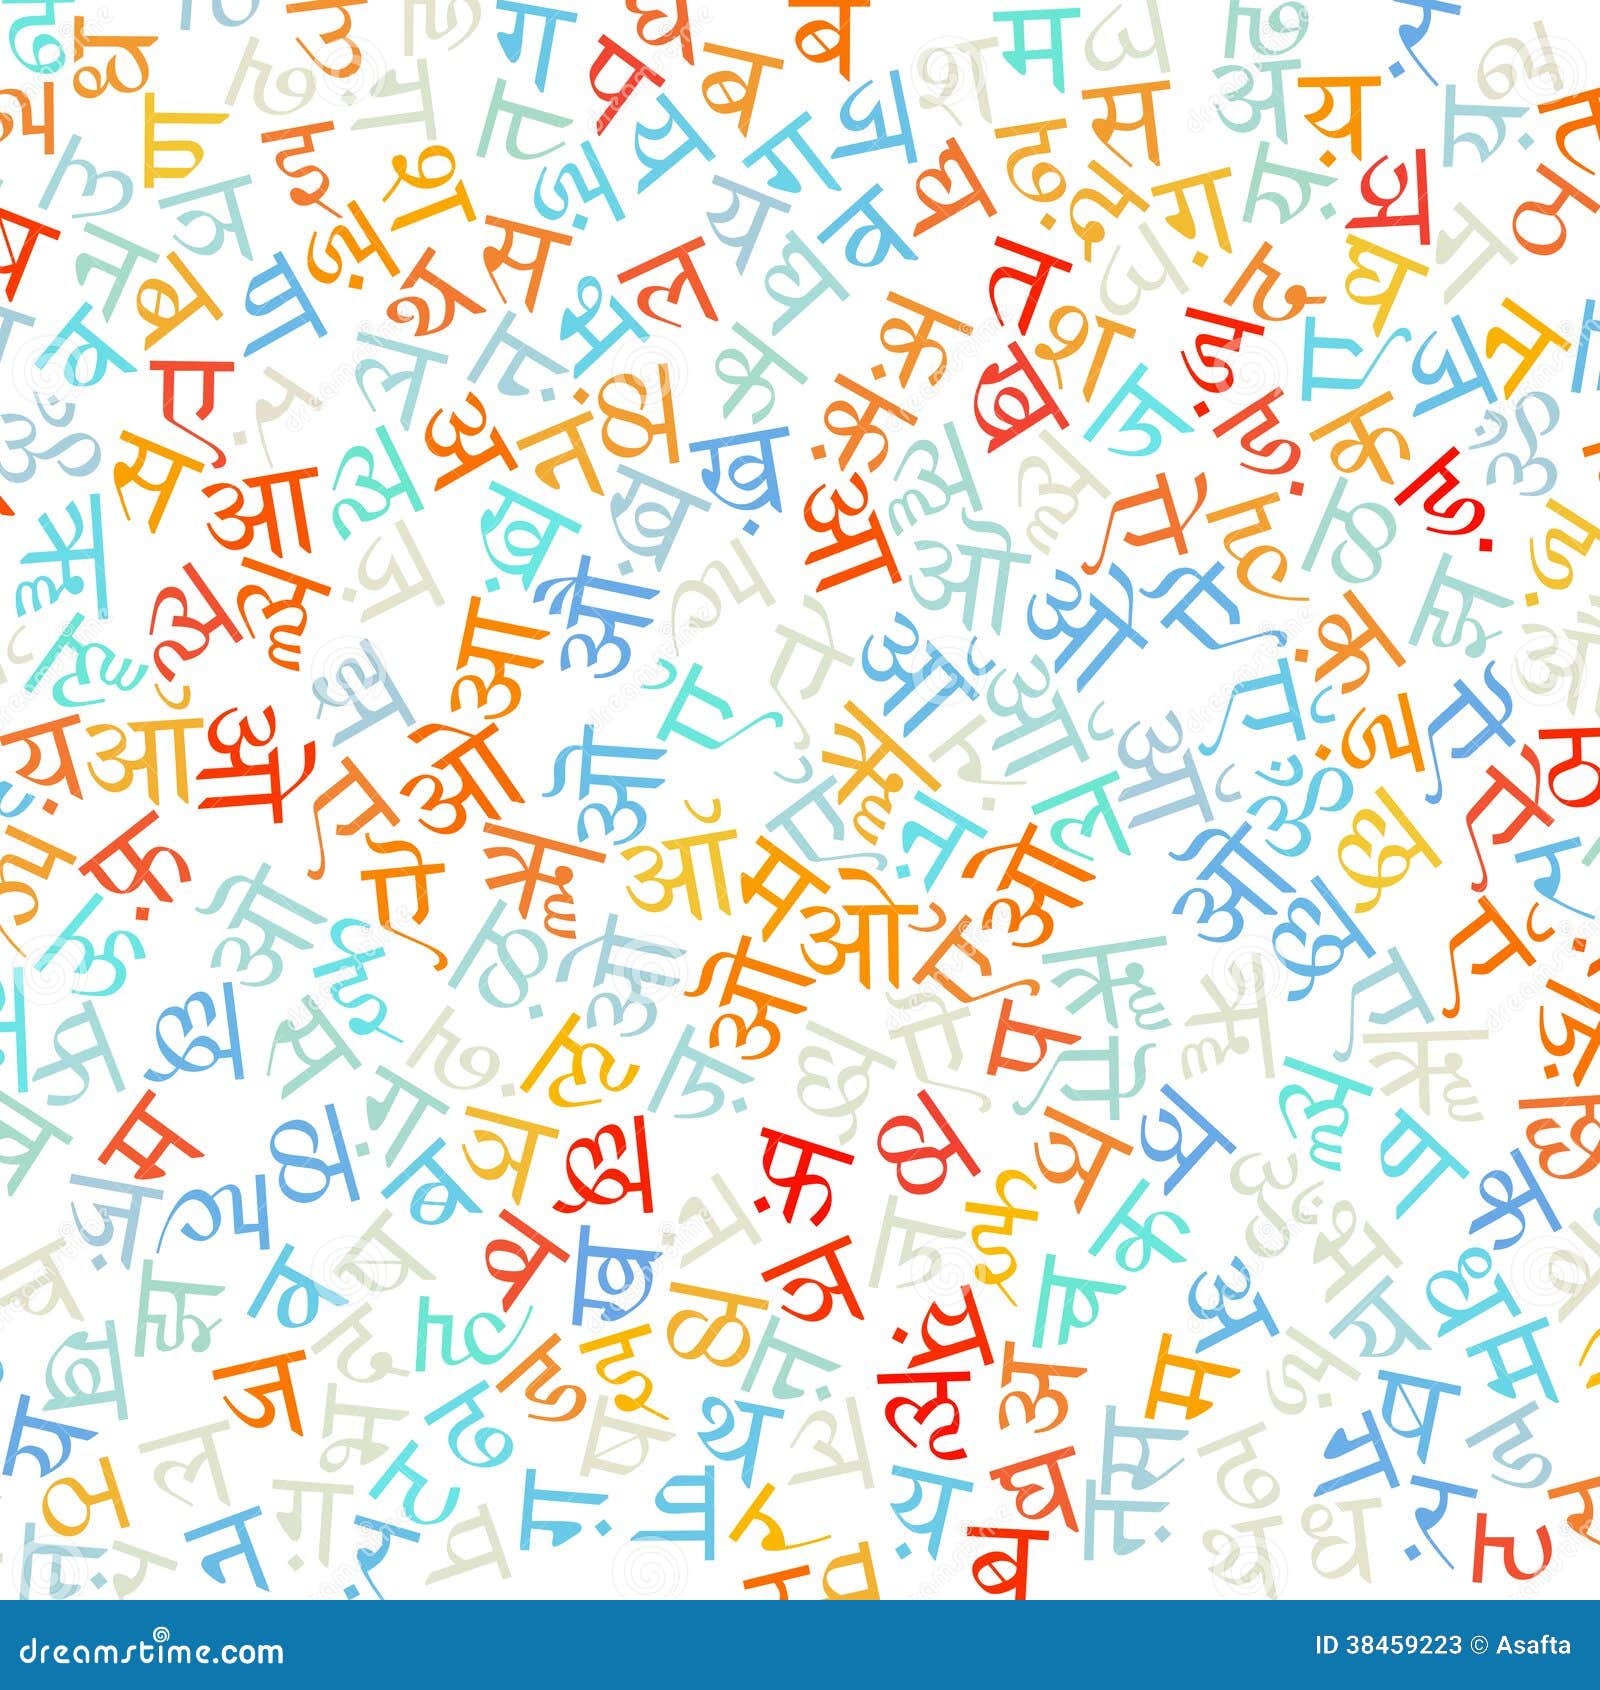 230 Love wallpapers in Hindi ideas | love wallpaper, hindi, love quates